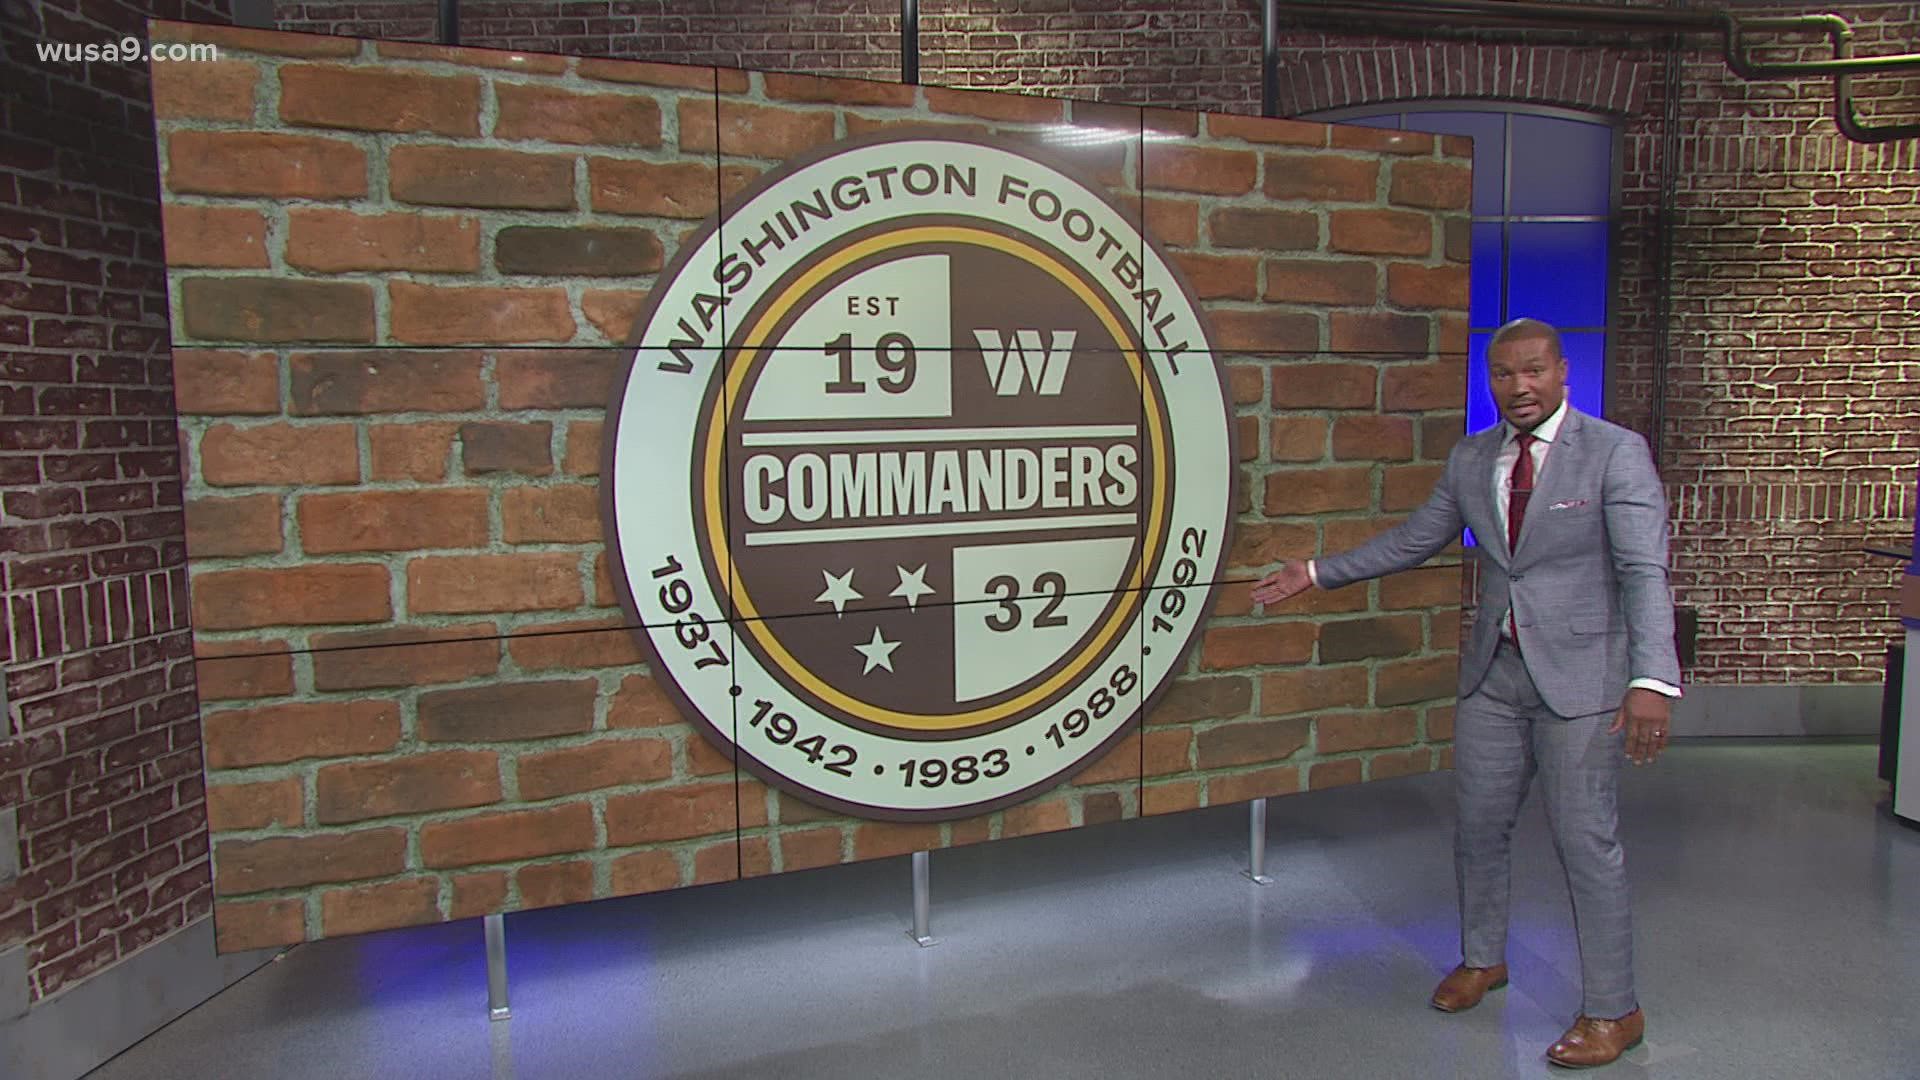 Washington Commanders want to change dates on crest logo  wusa9.com